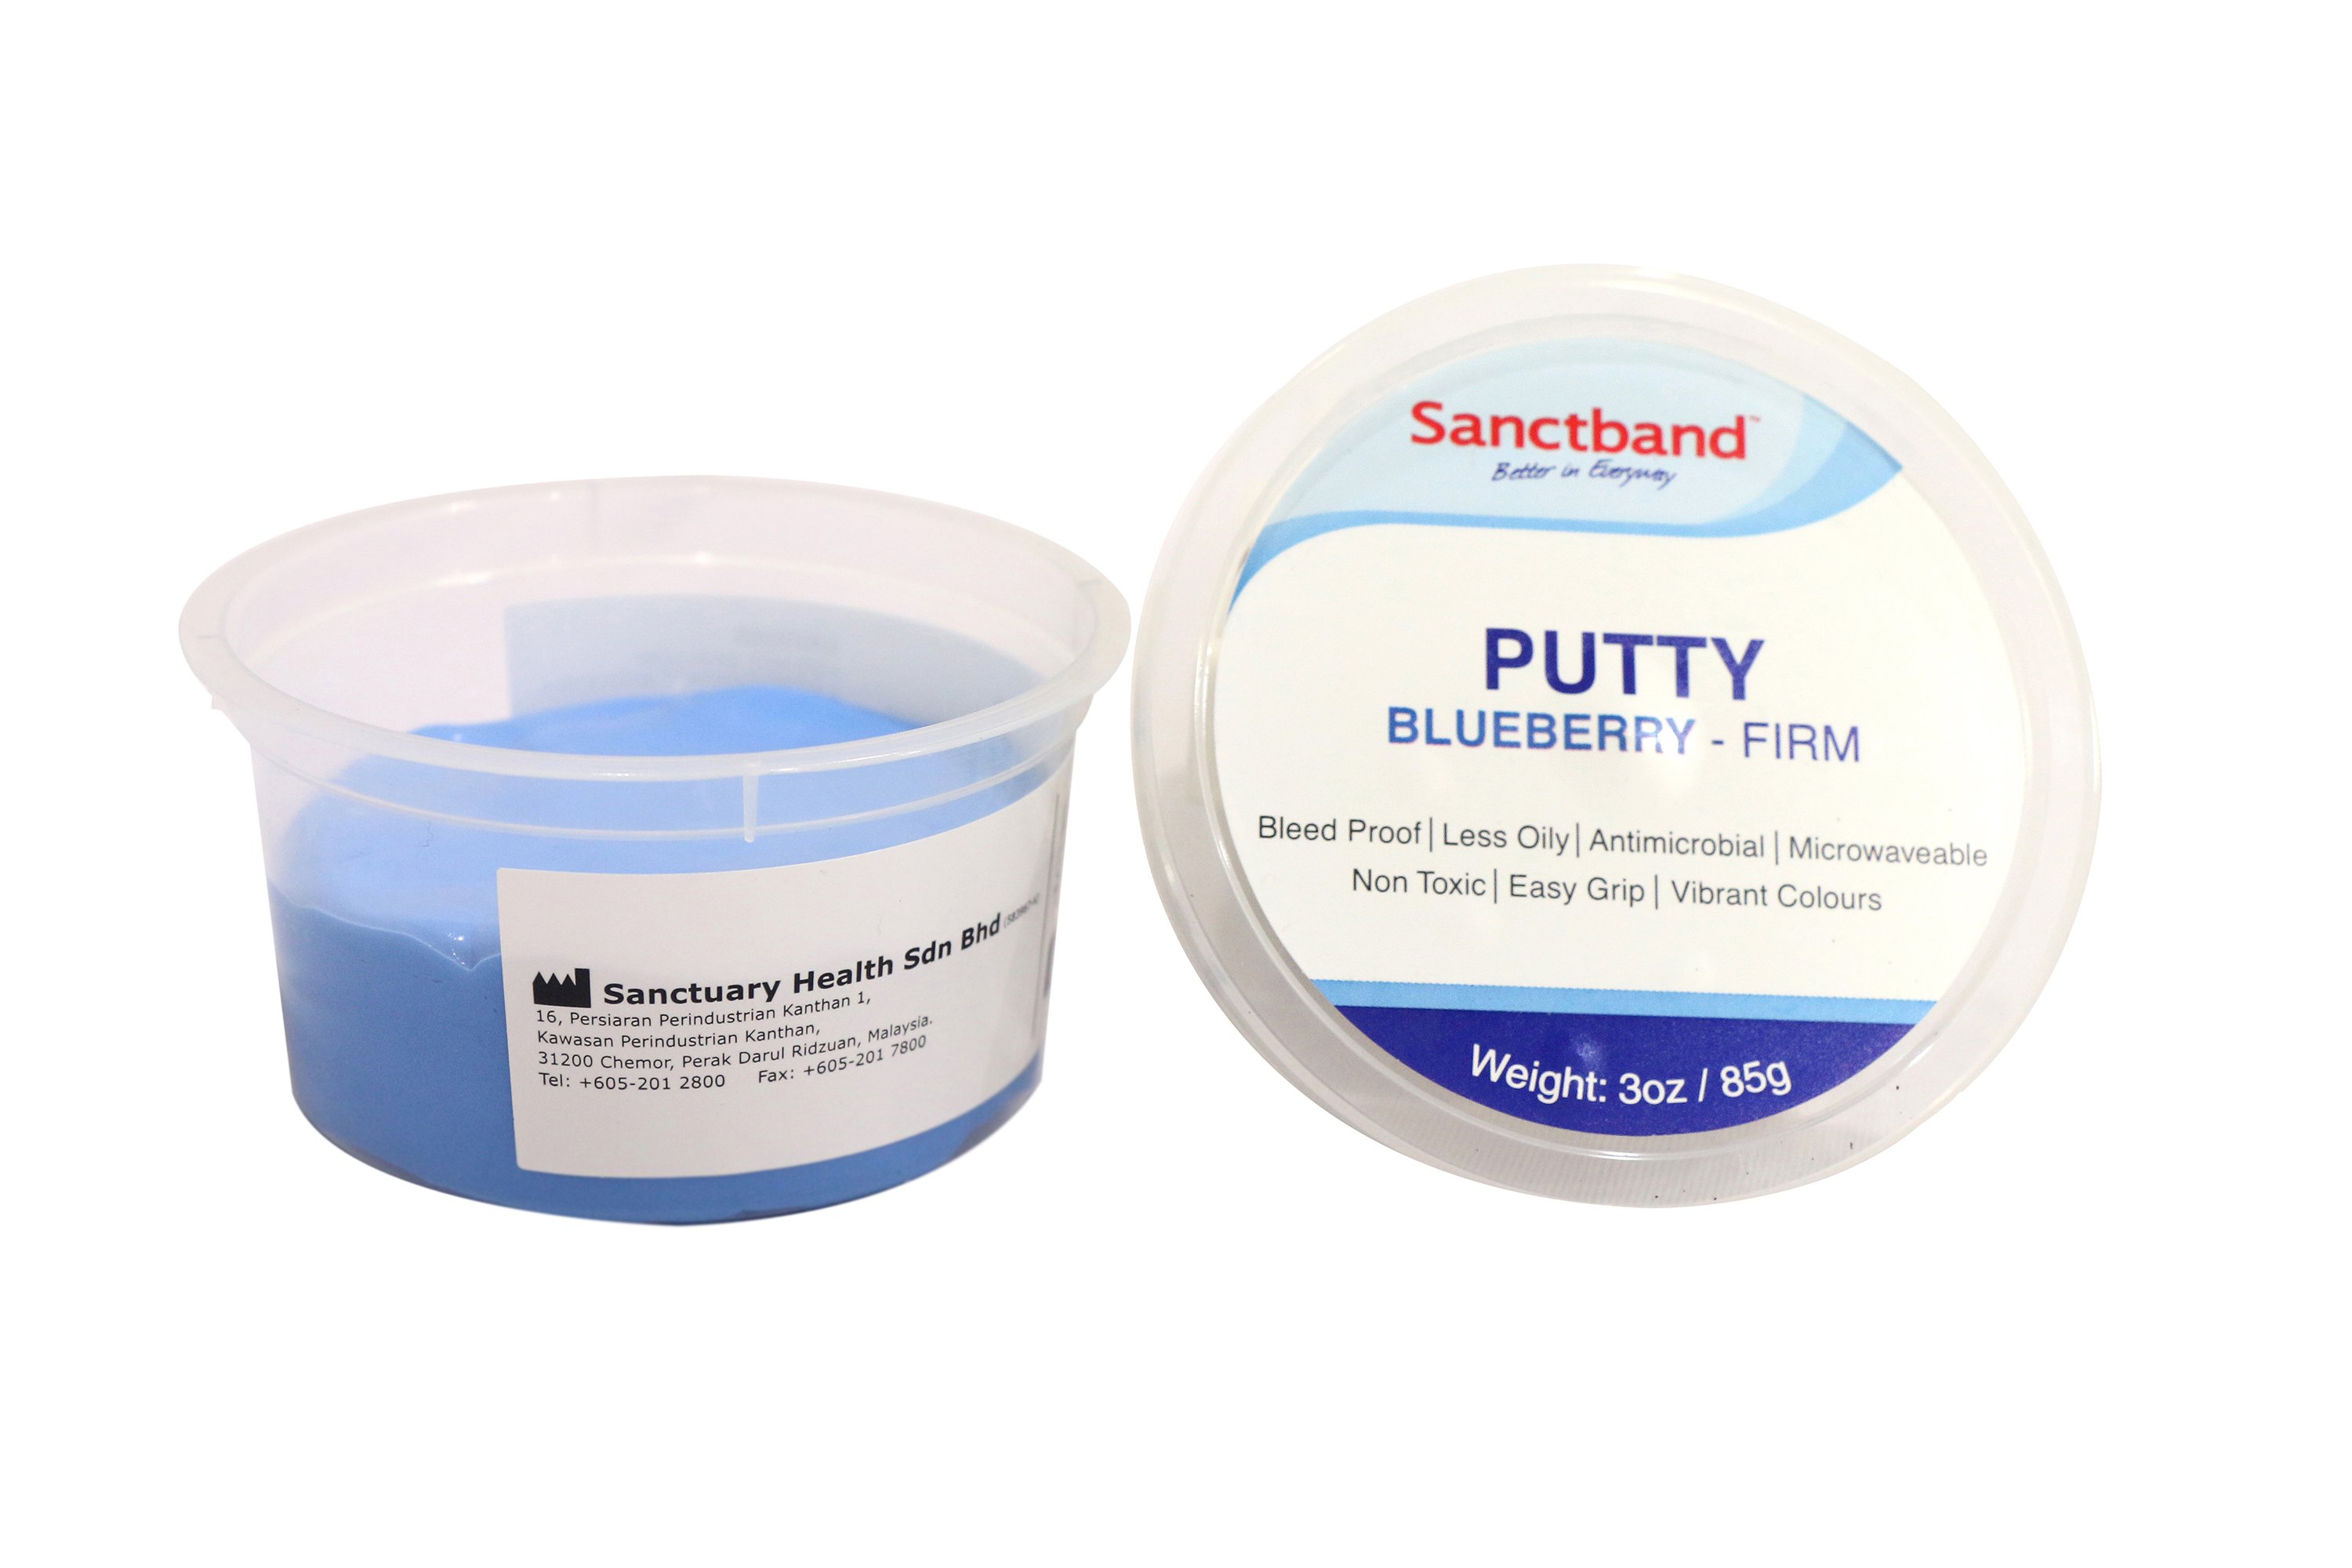 Sanctband Therapie Knete Putty Blueberry firm